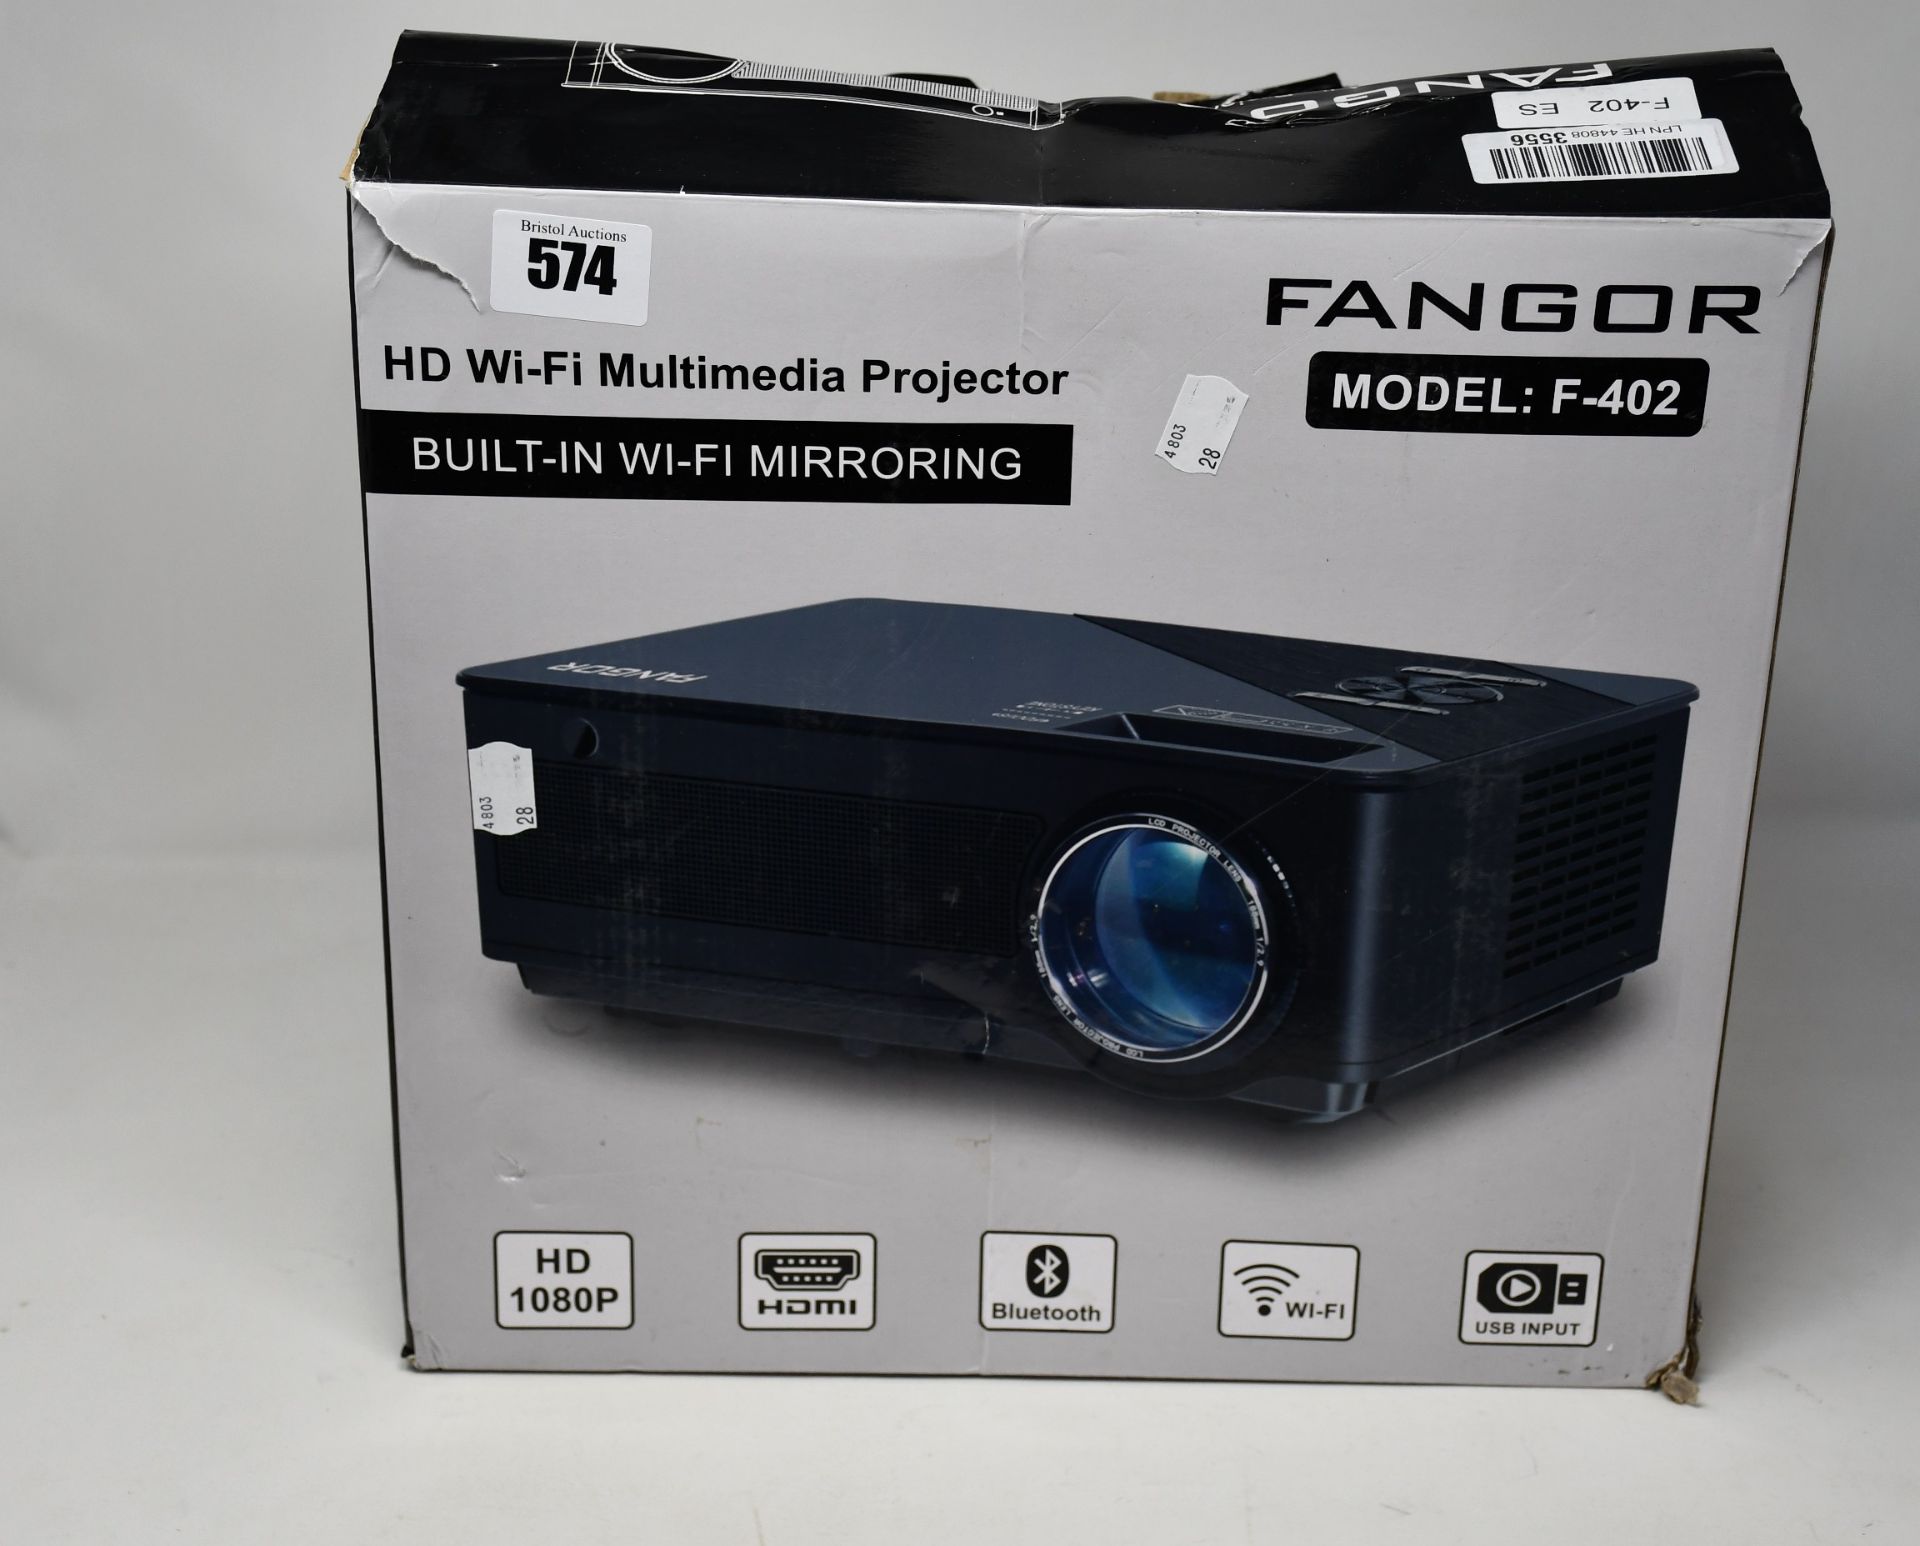 A boxed Fangor F-402 HD Wi-Fi Multimedia projector (Box damaged).